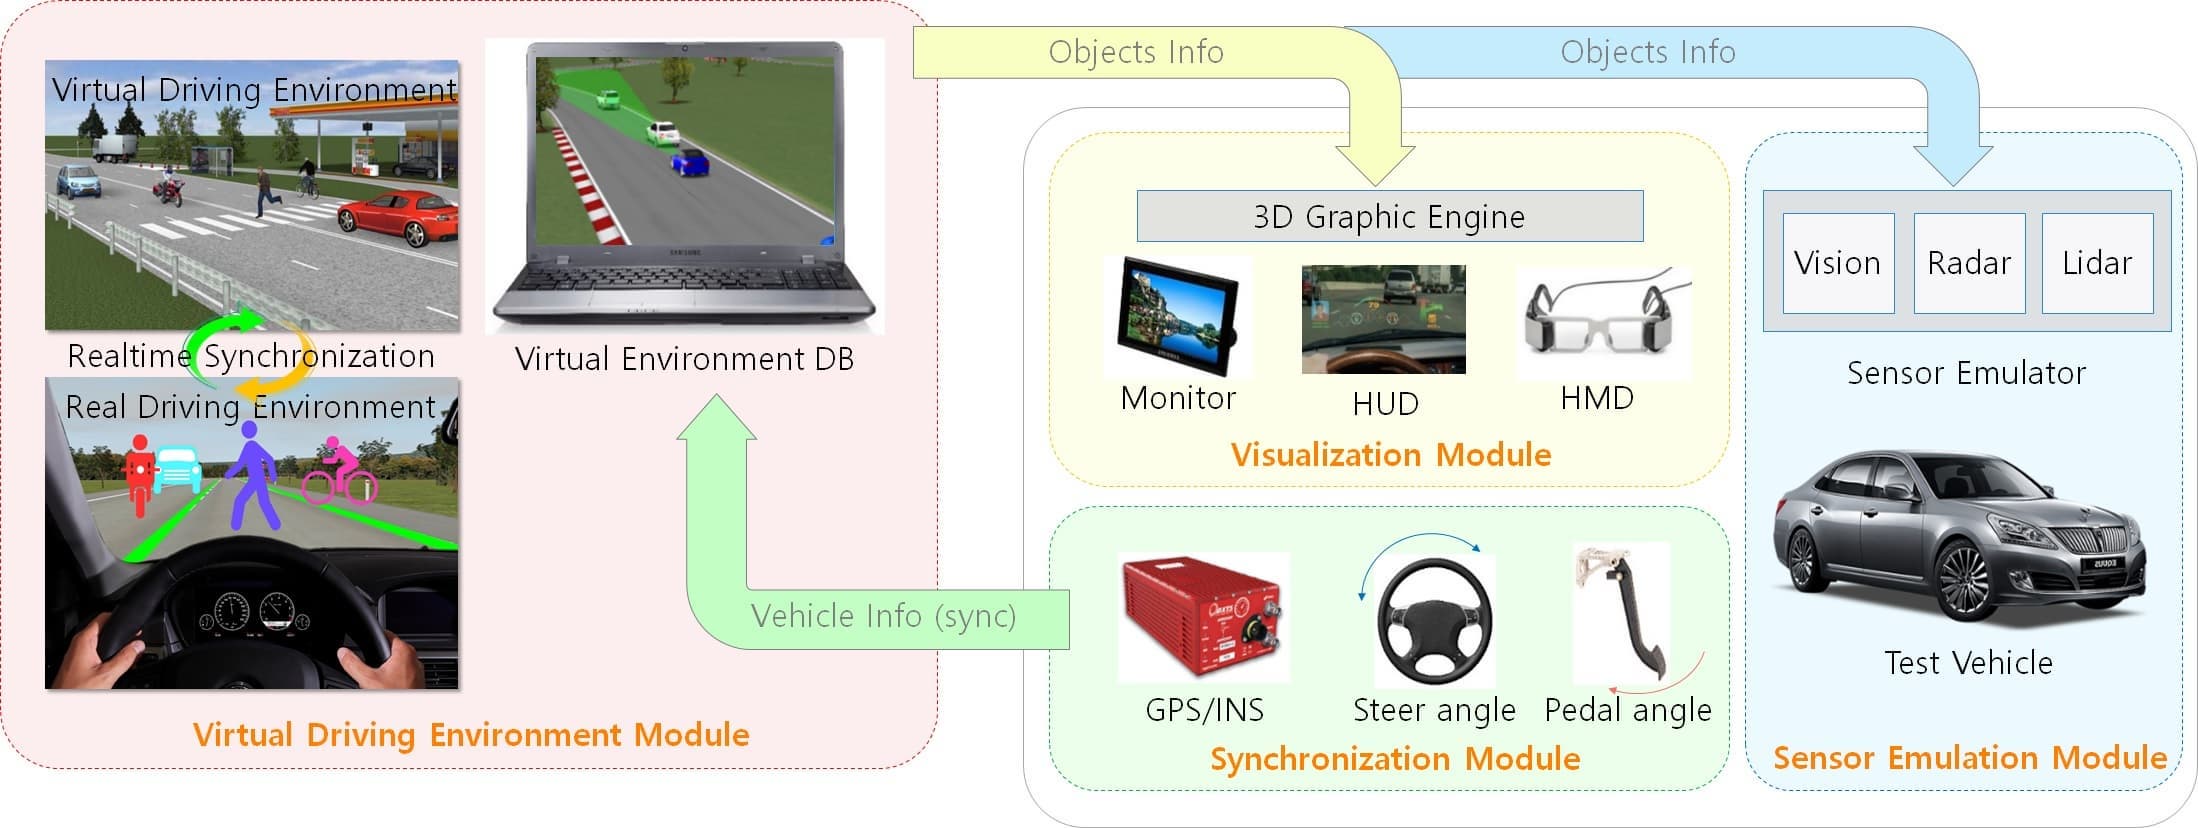 MOISim for ADAS_AD vehicle test in virtual environment